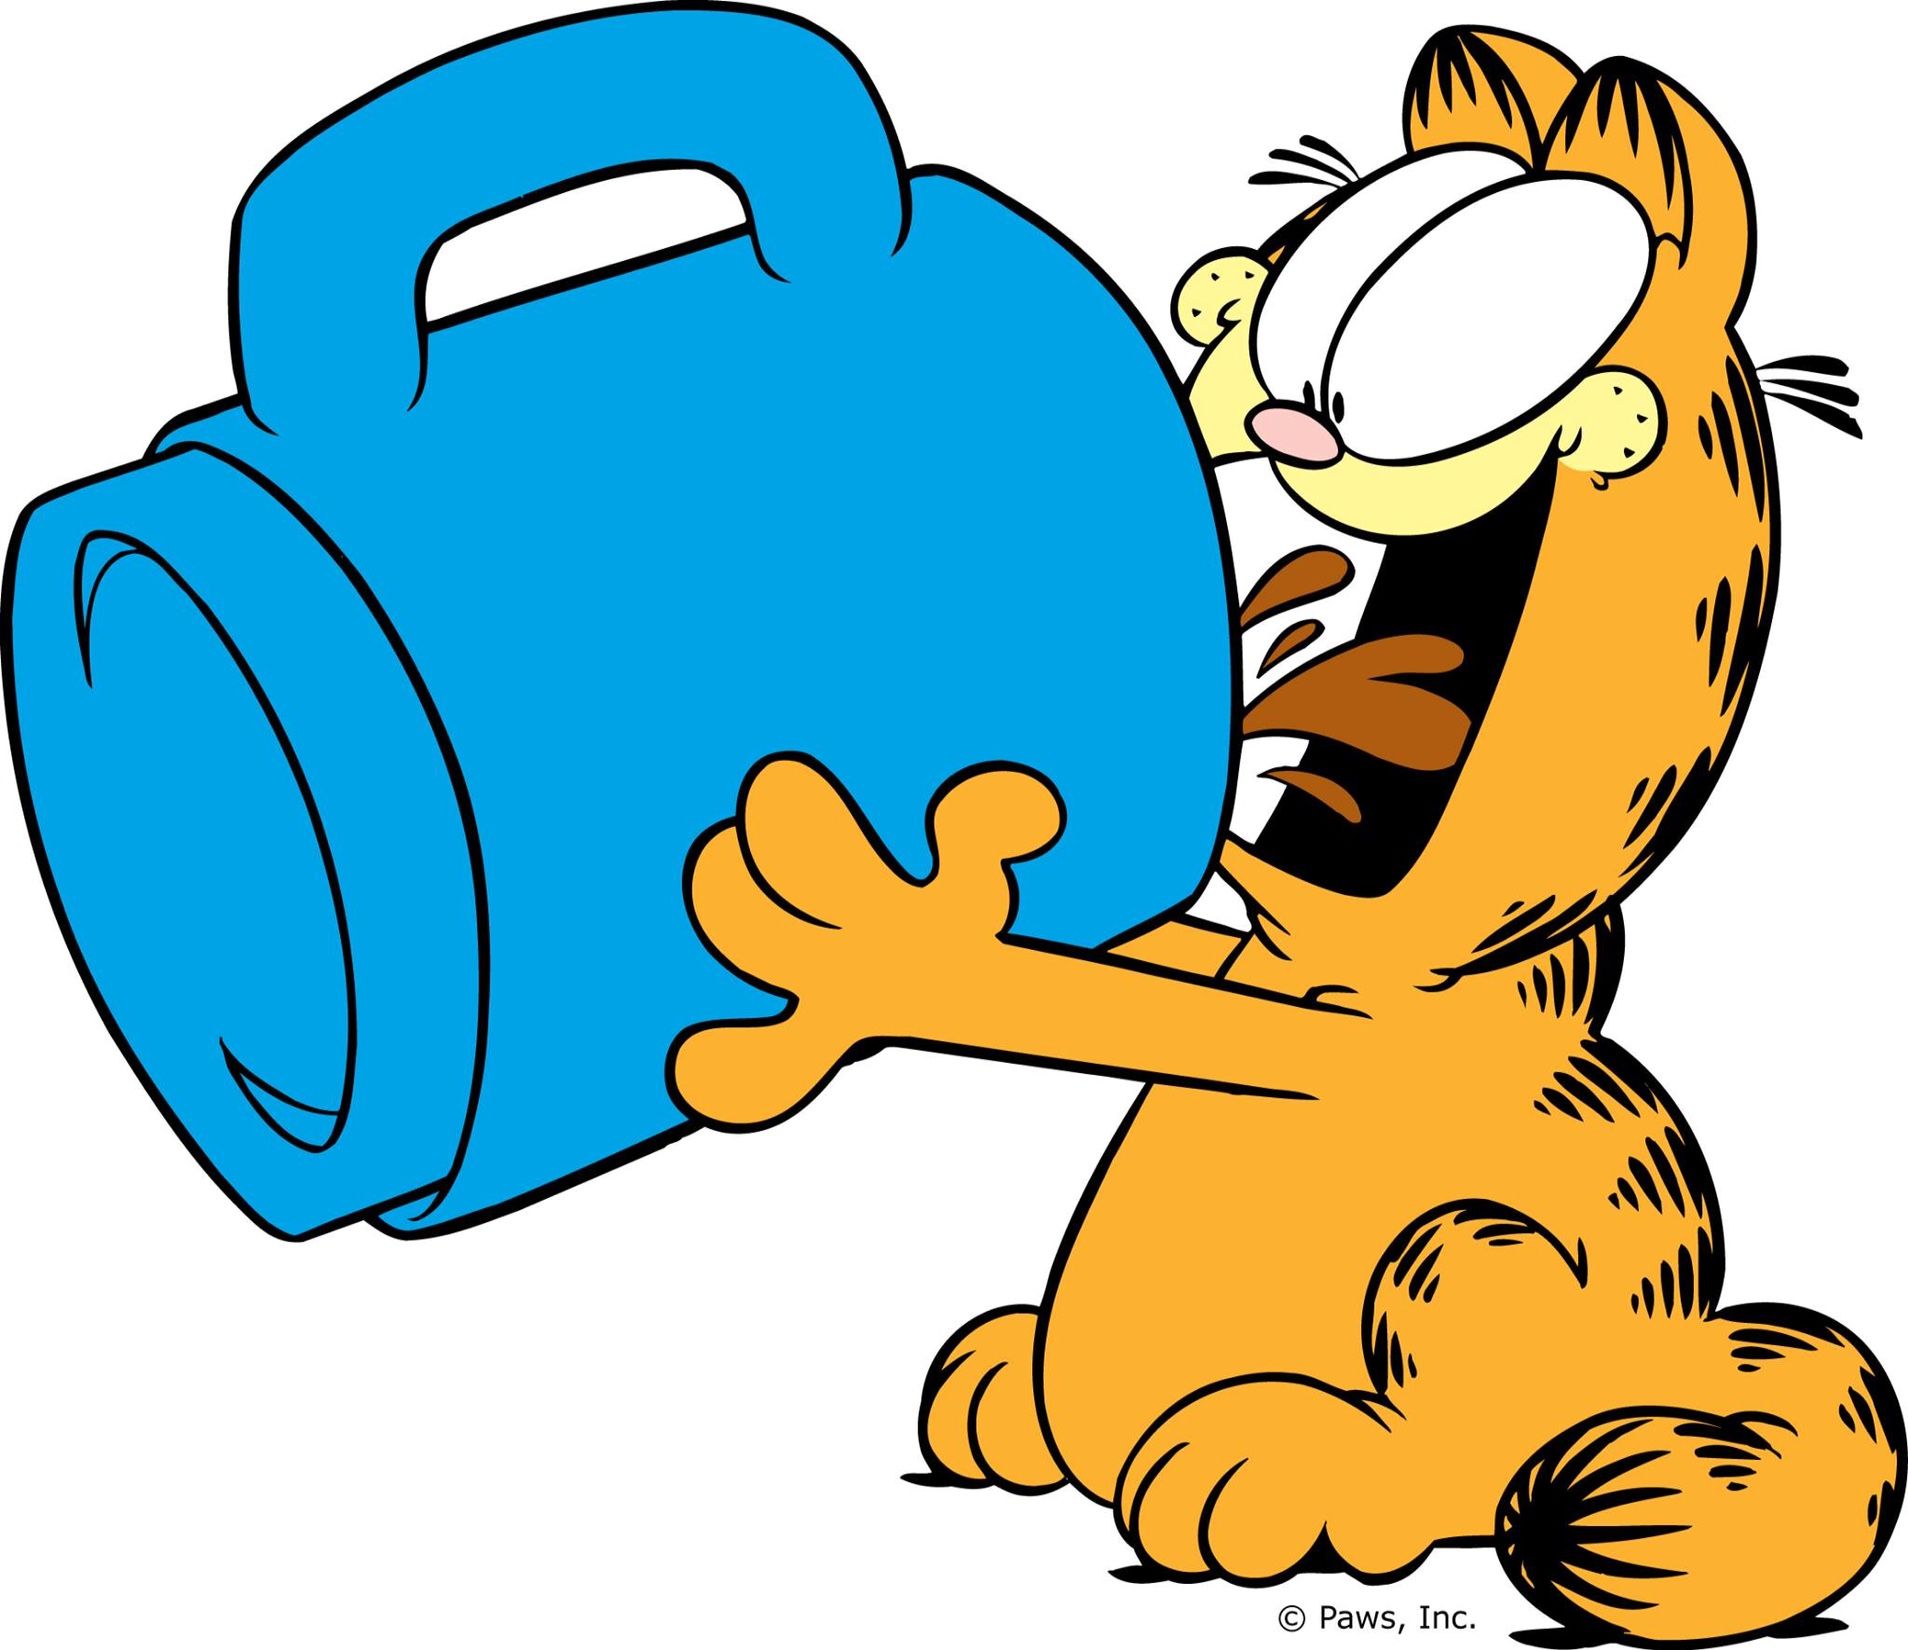 Garfield Drinking Coffee. Garfield and odie, Garfield, Garfield